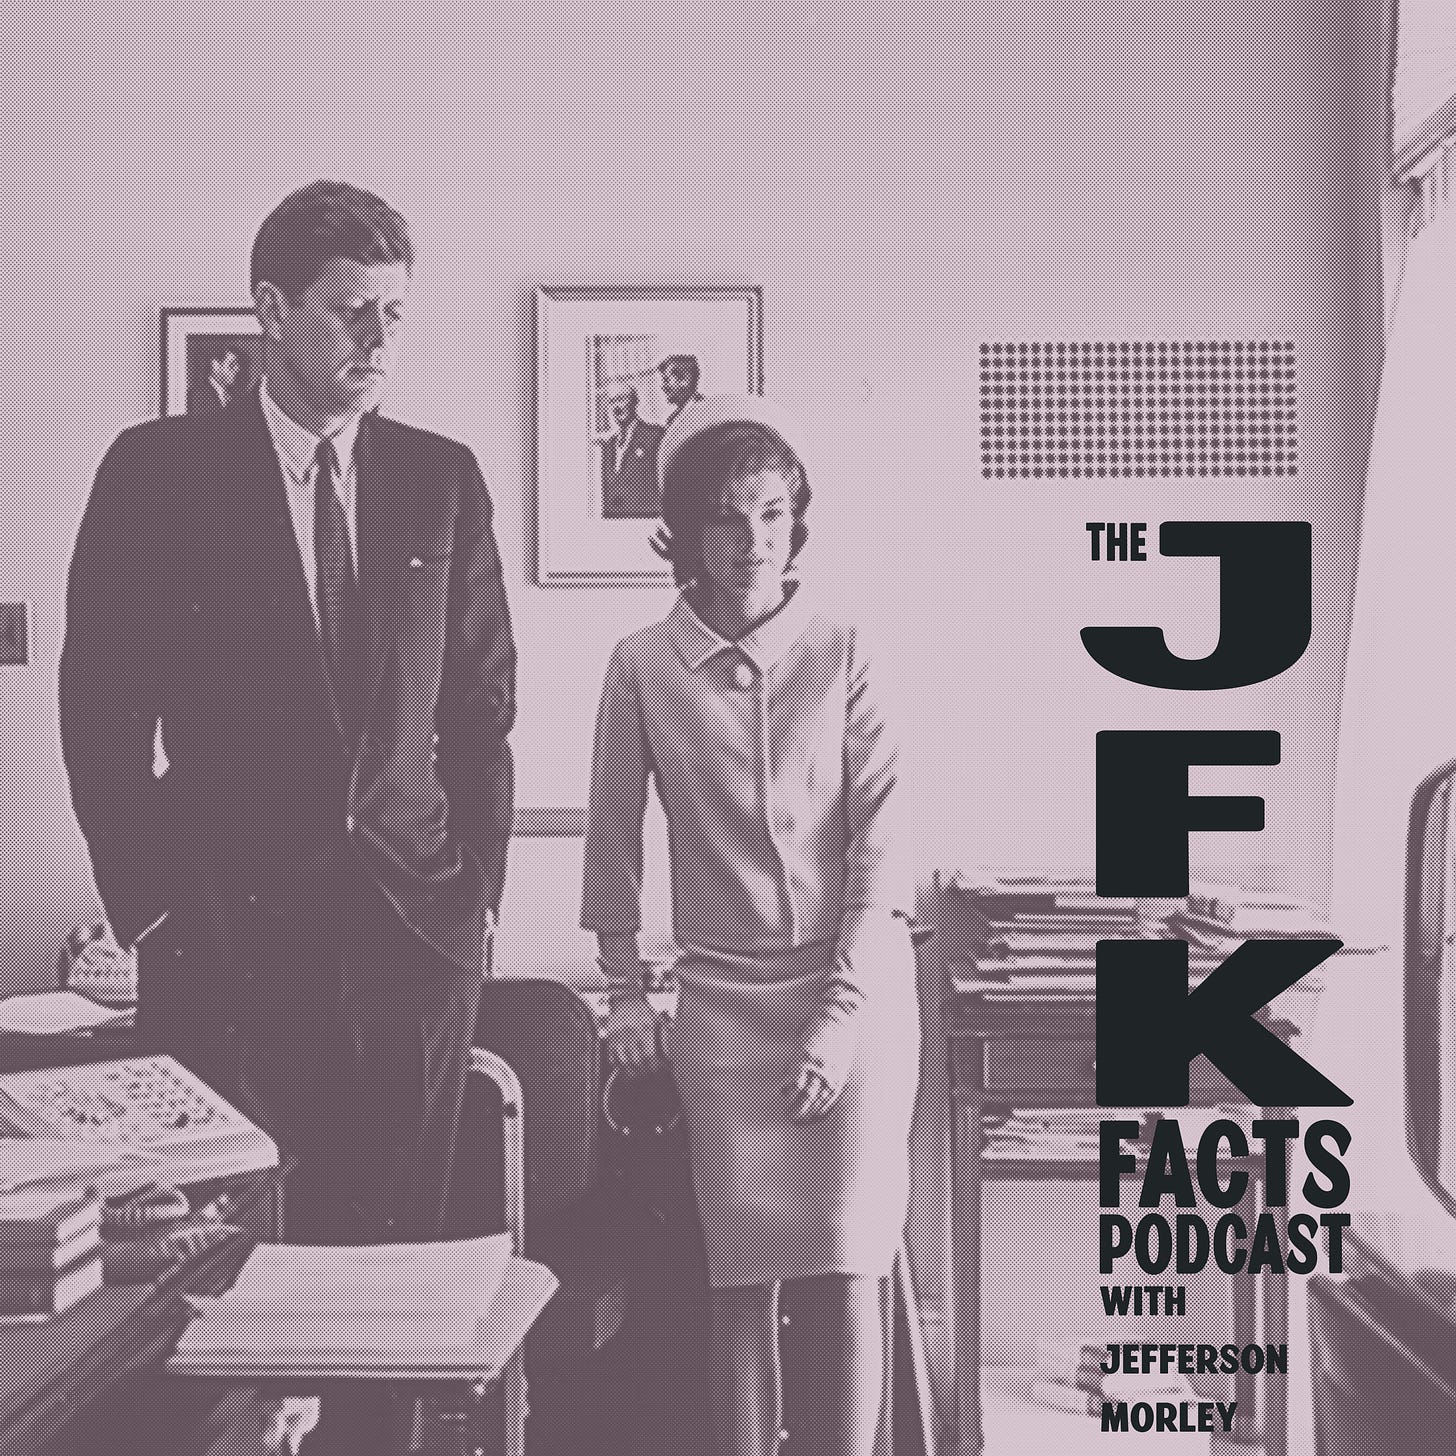 JFK Facts Podcast